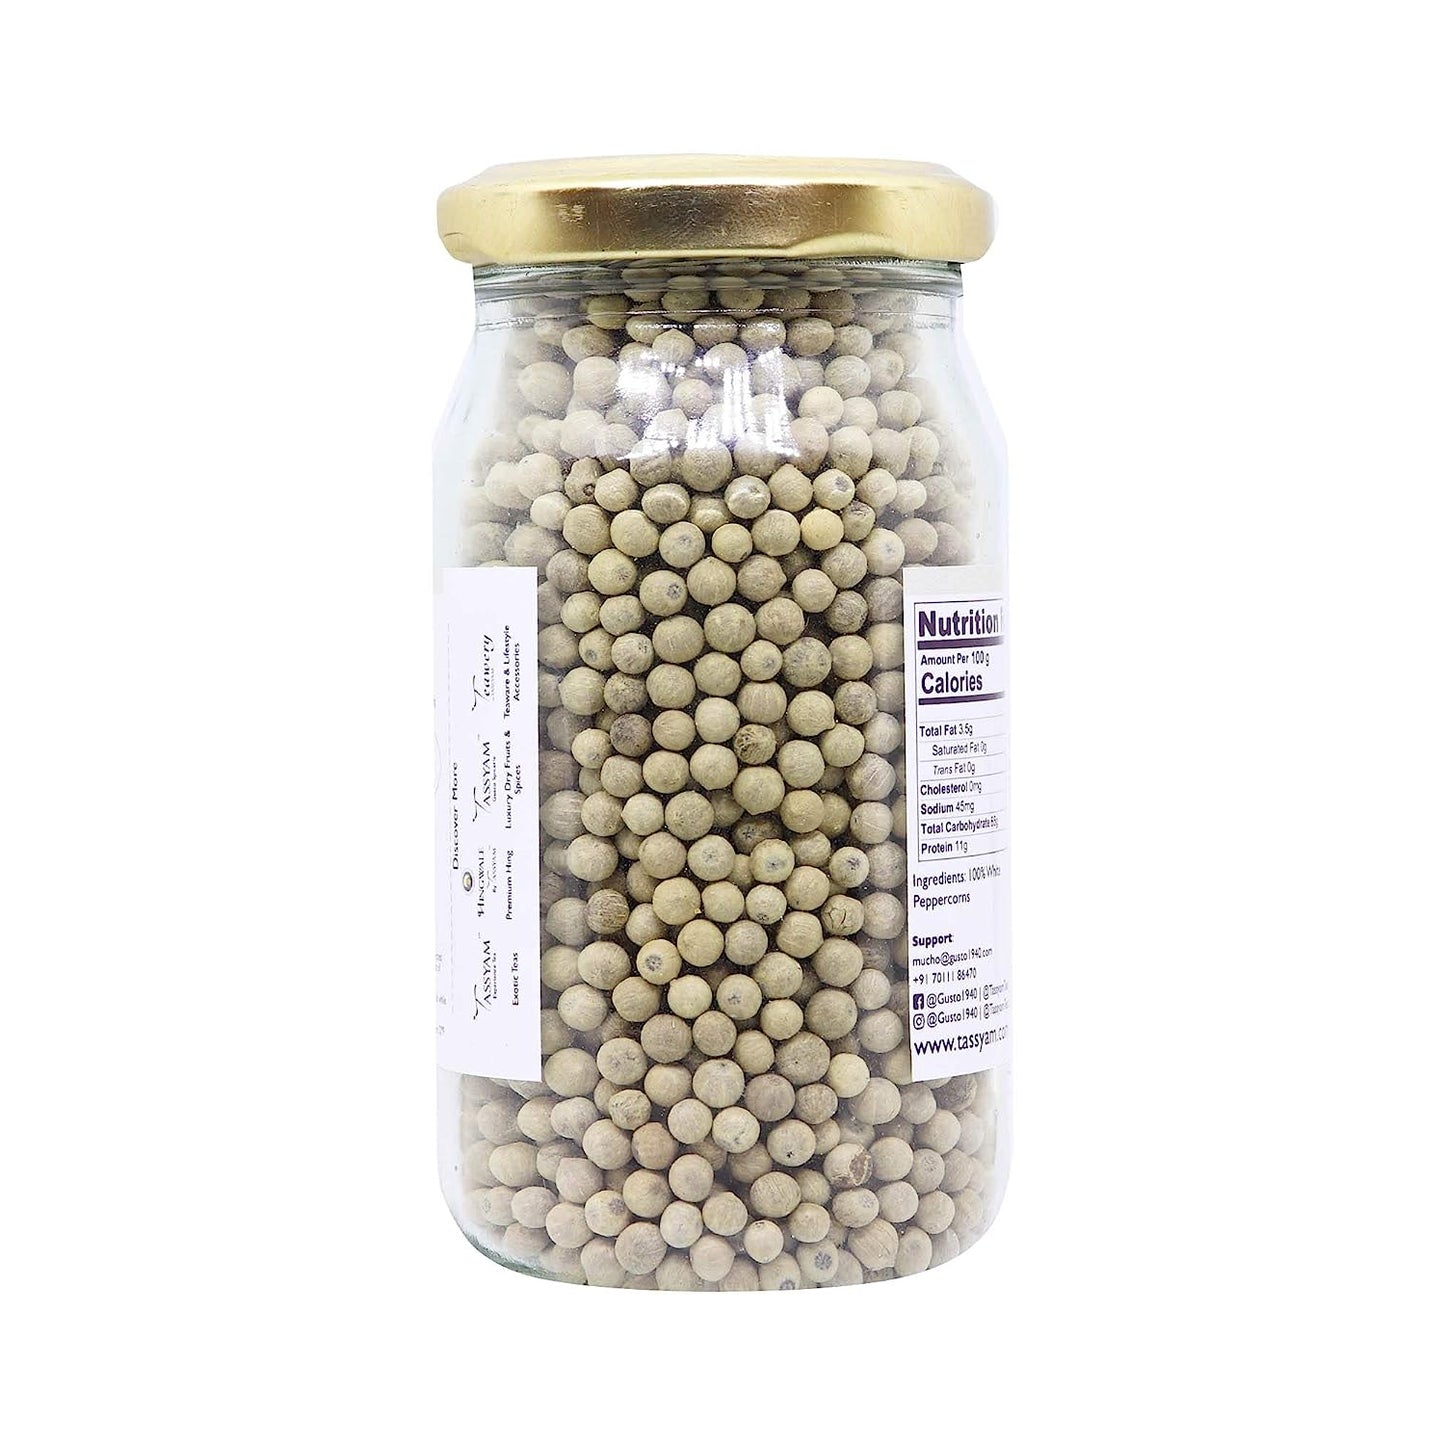 White Peppercorns - Tassyam Organics